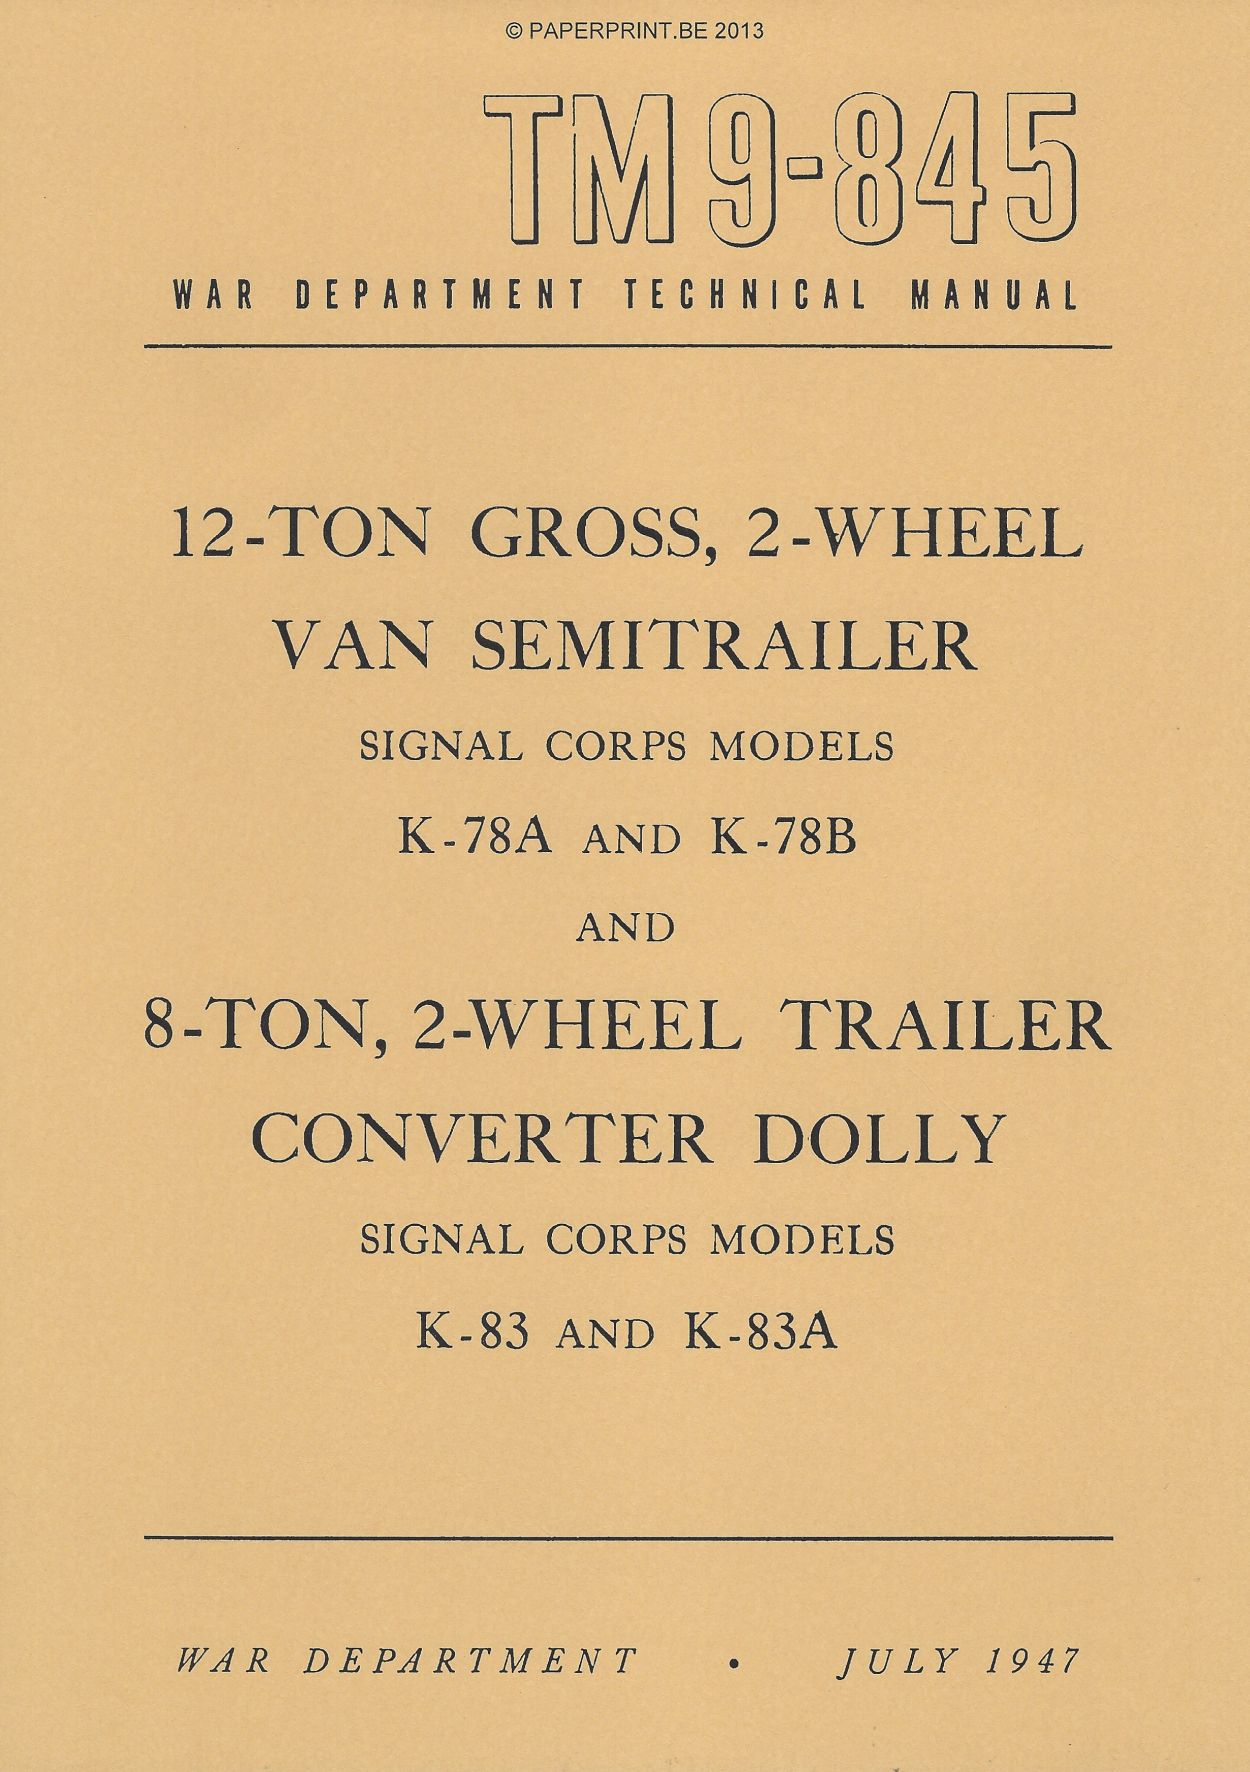 TM 9-845 US 12-TON GROSS, 2-WHEEL VAN SEMITRAILER AND 8-TON, 2-WHEEL TRAILER CONVERTER DOLLY